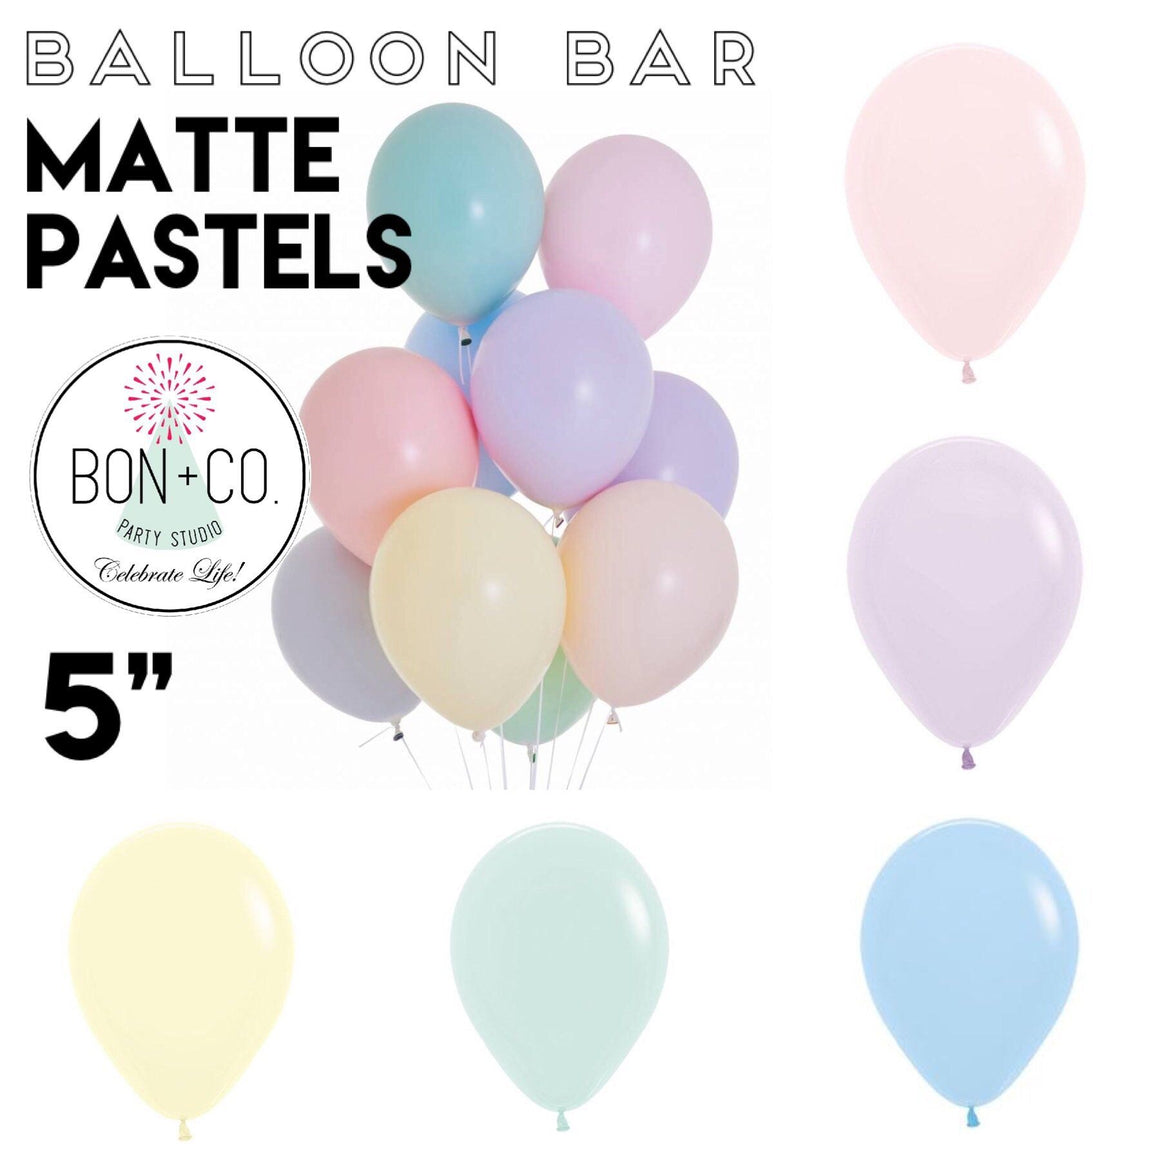 BALLOON BAR - MATTE PASTELS 5”, Balloons, Sempertex - Bon + Co. Party Studio